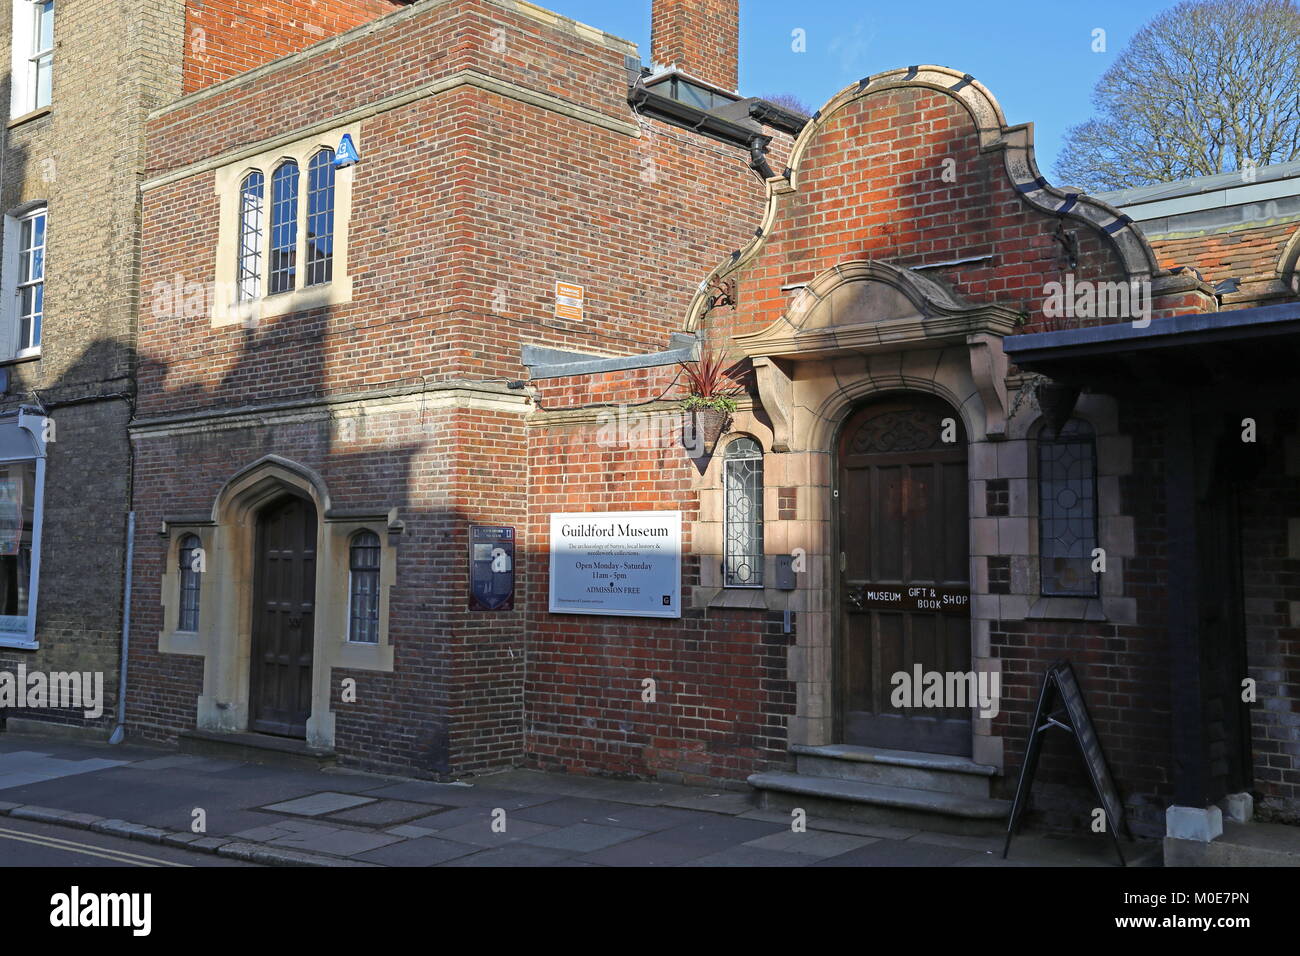 Musée de Guildford, Quarry Street, Guildford, Surrey, Angleterre, Grande-Bretagne, Royaume-Uni, UK, Europe Banque D'Images